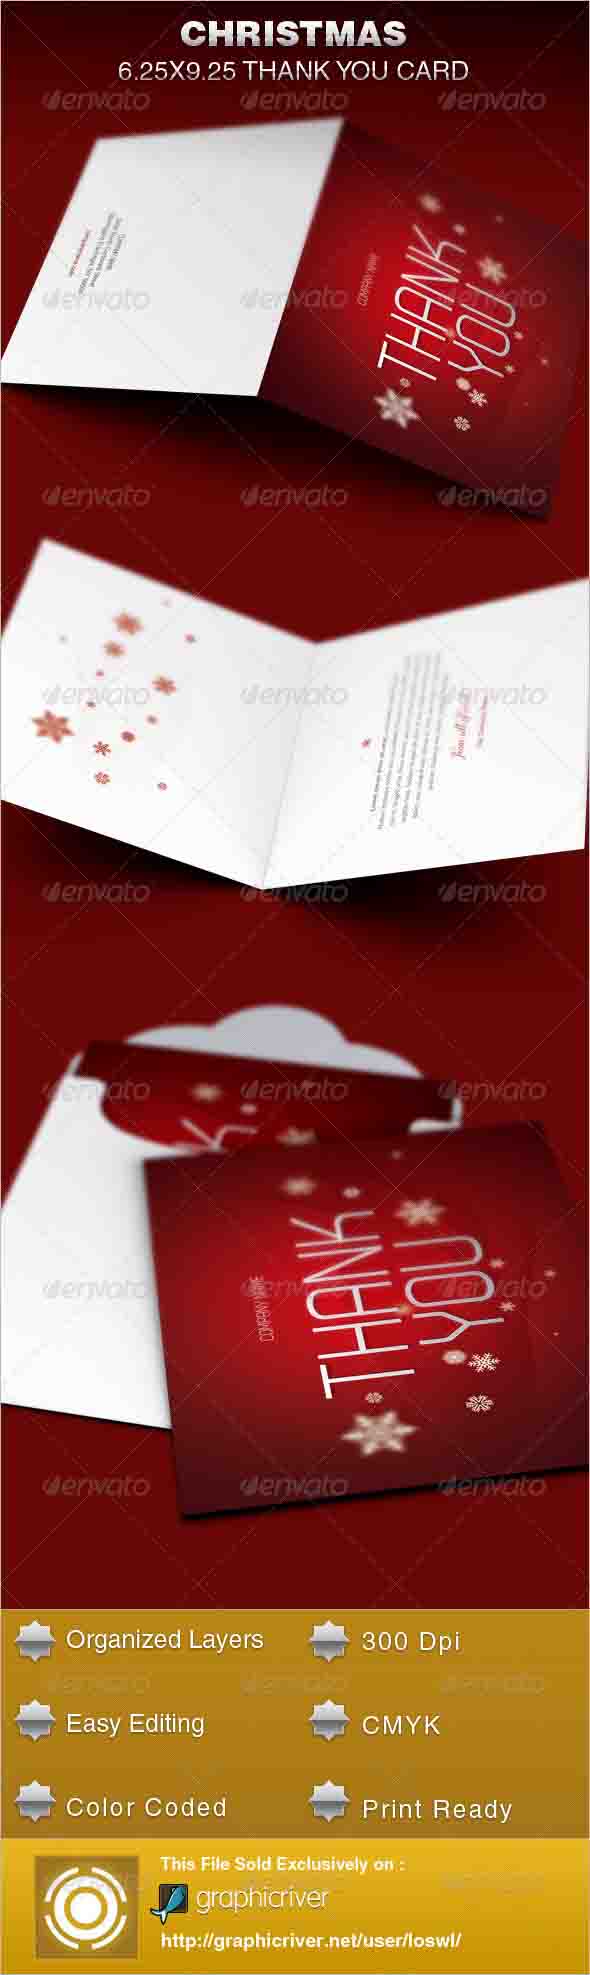 Christmas Thank You Card Ideas Templates